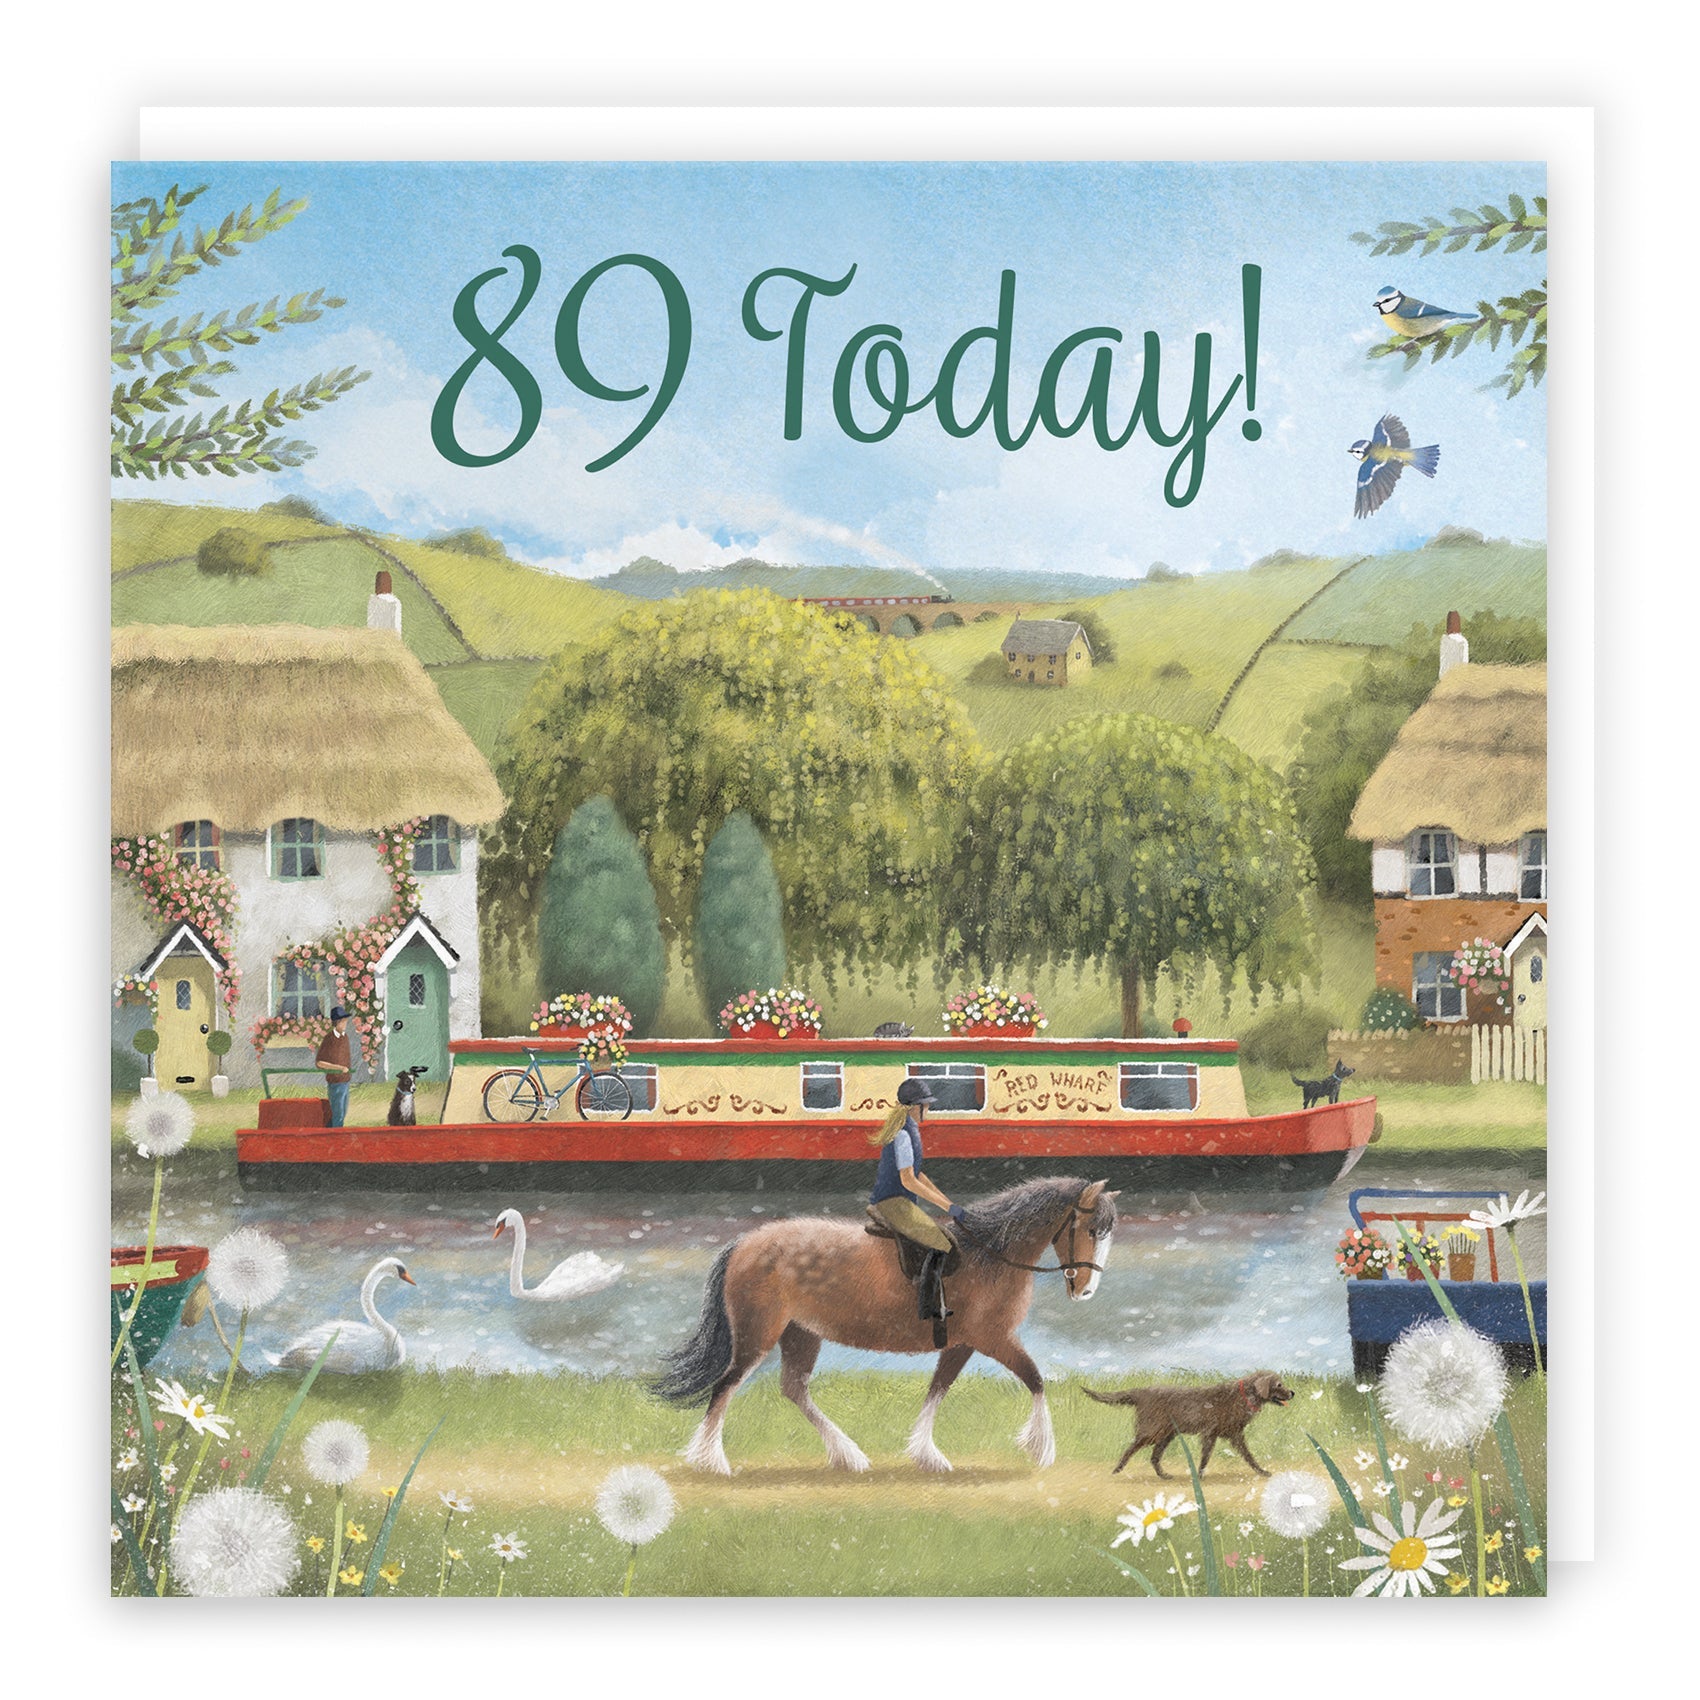 89th Birthday Cards - Age 89